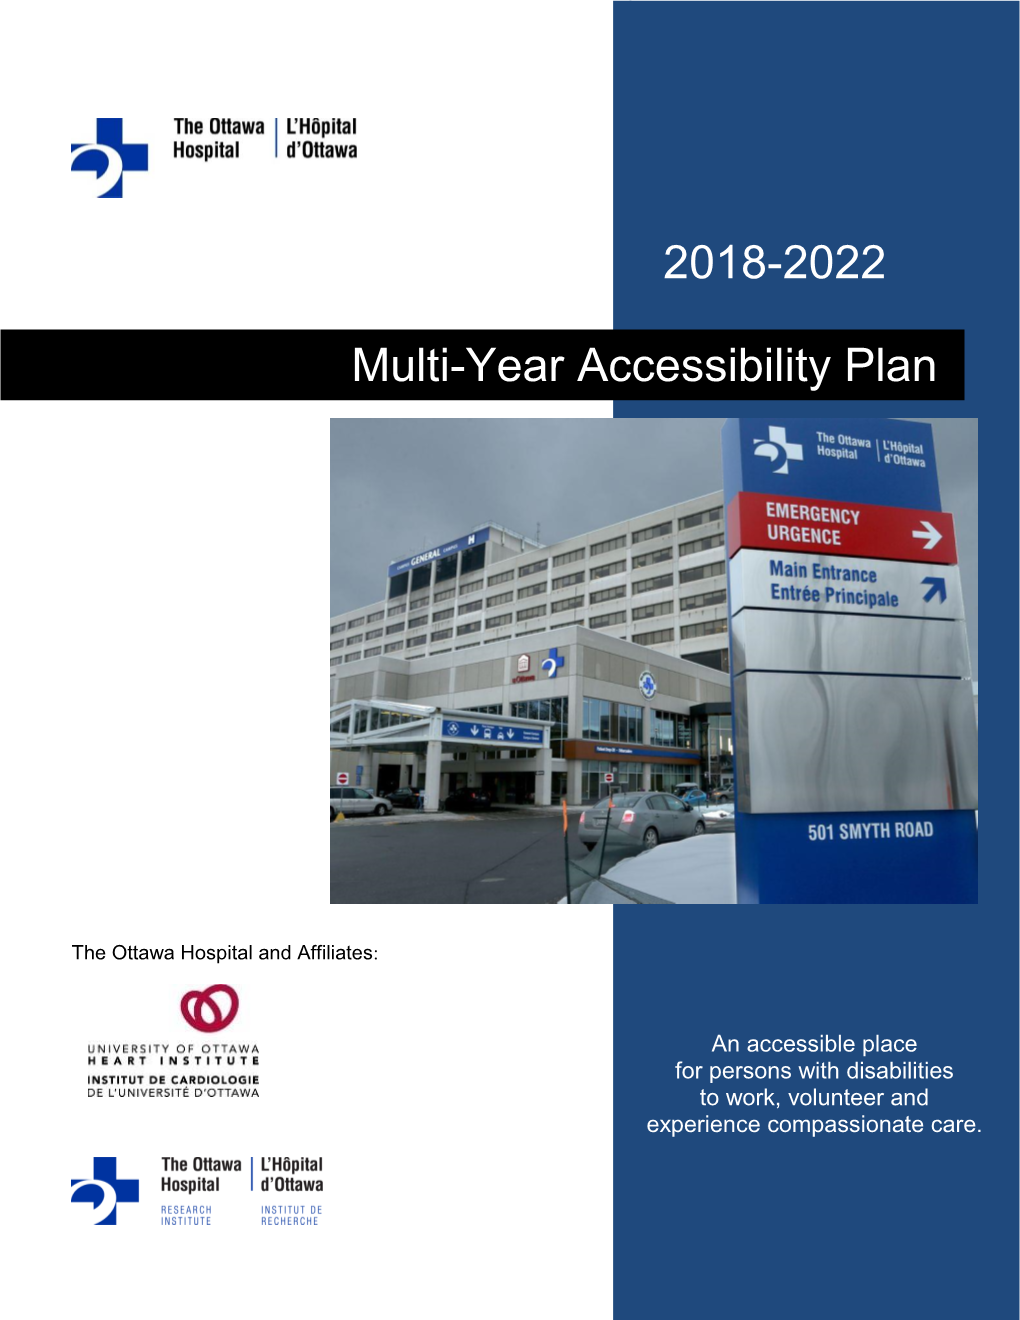 The Ottawa Hospital Multi-Year Accessibility Plan 2018-2022